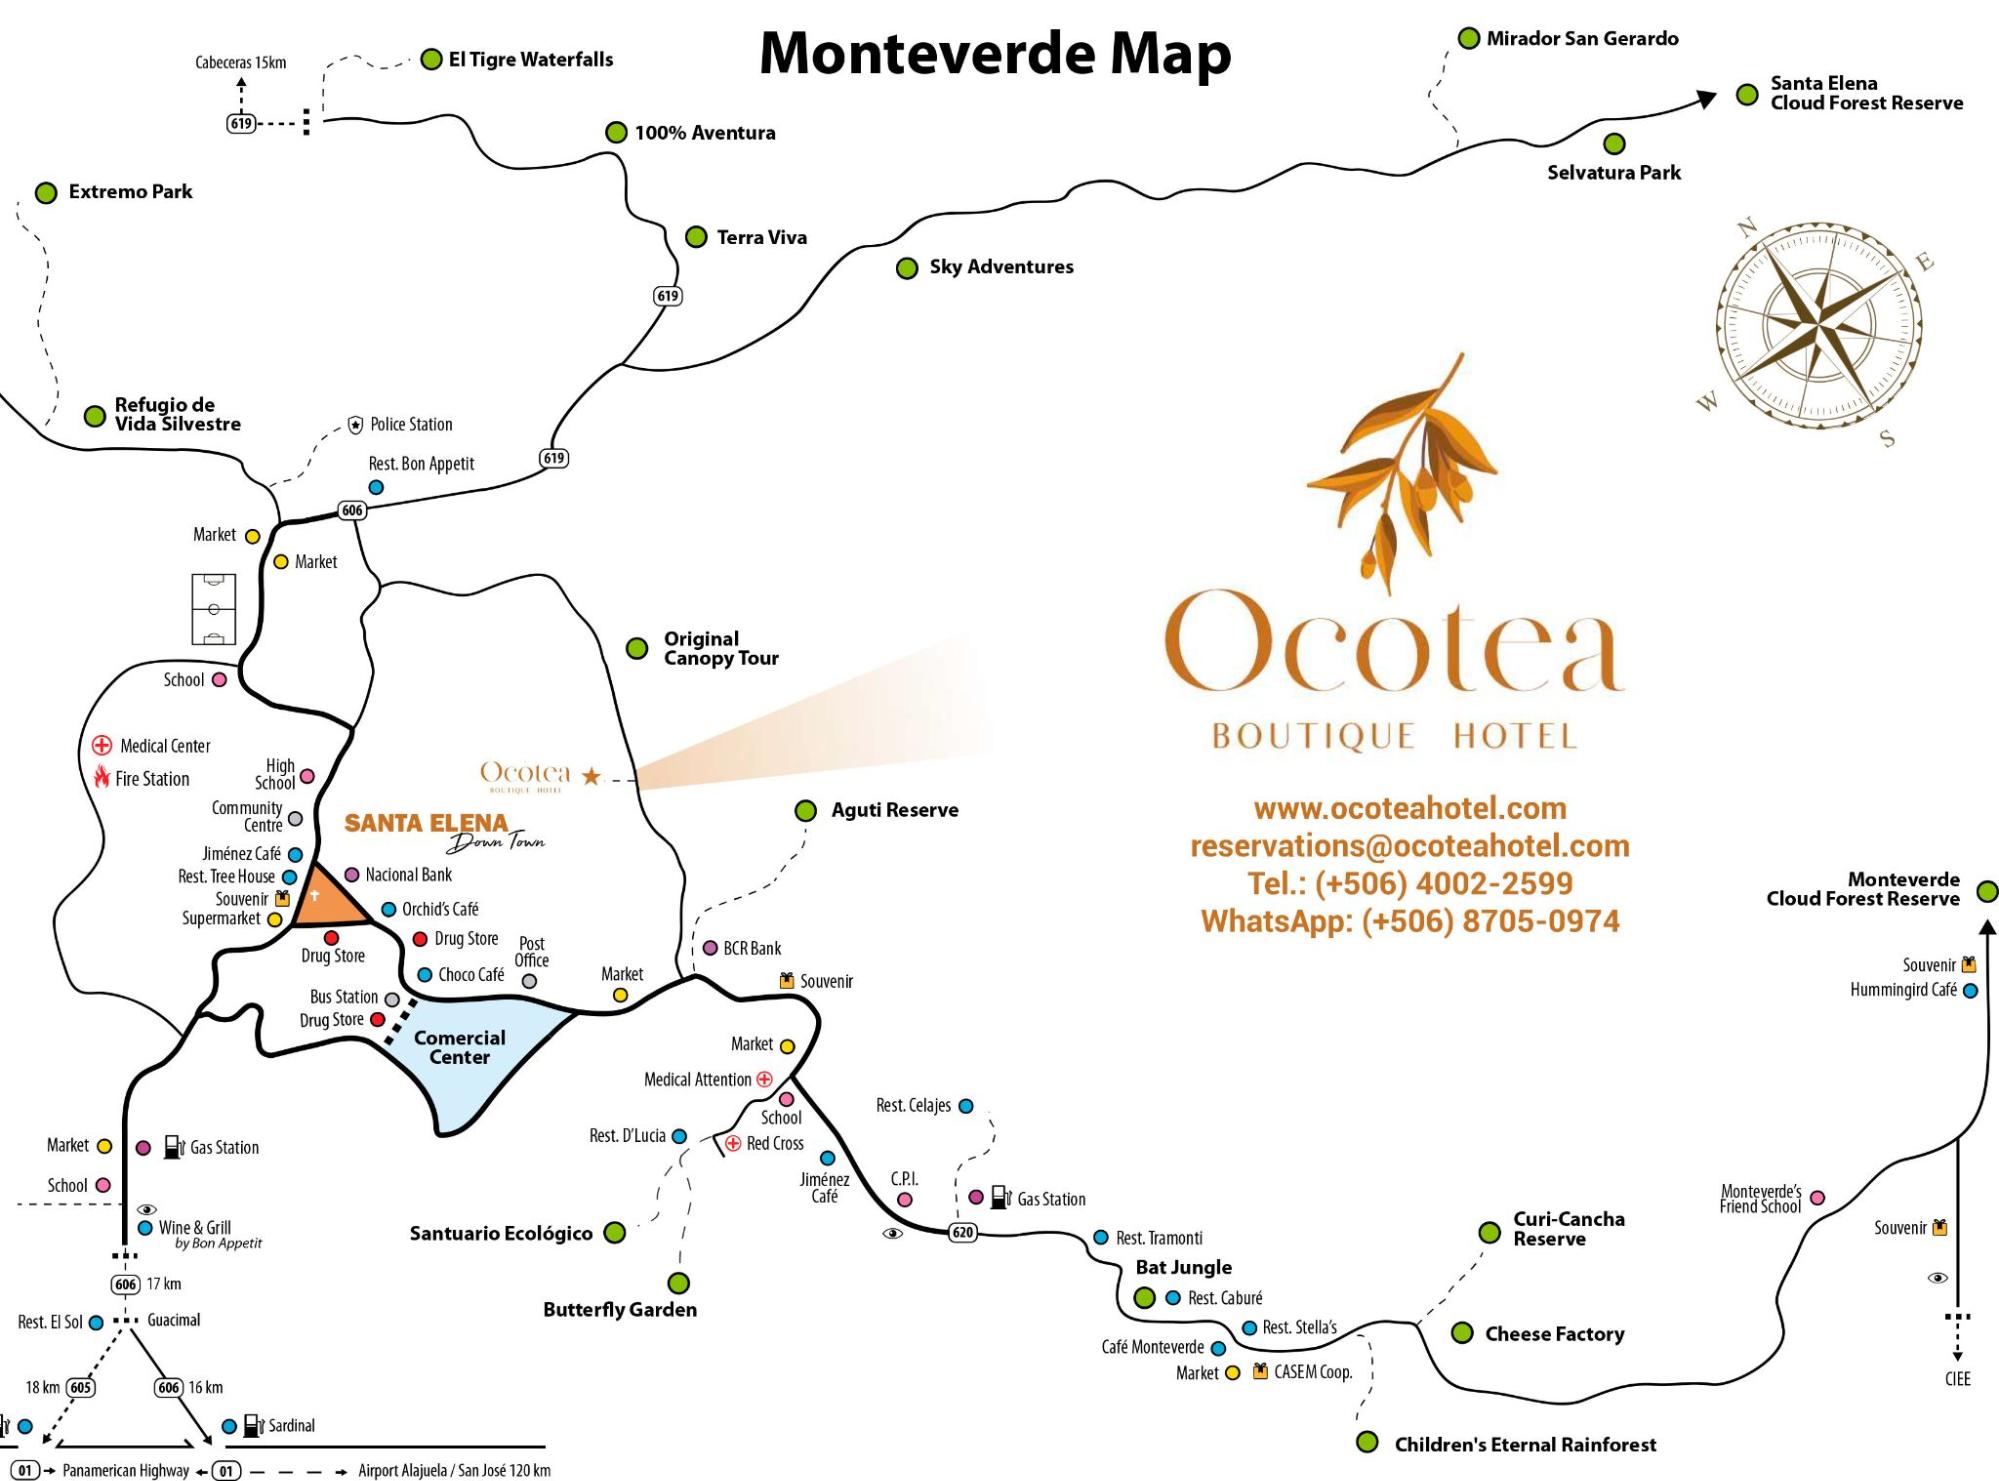 Monteverde Costa Rica - Ocotea Boutique Hotel (11)